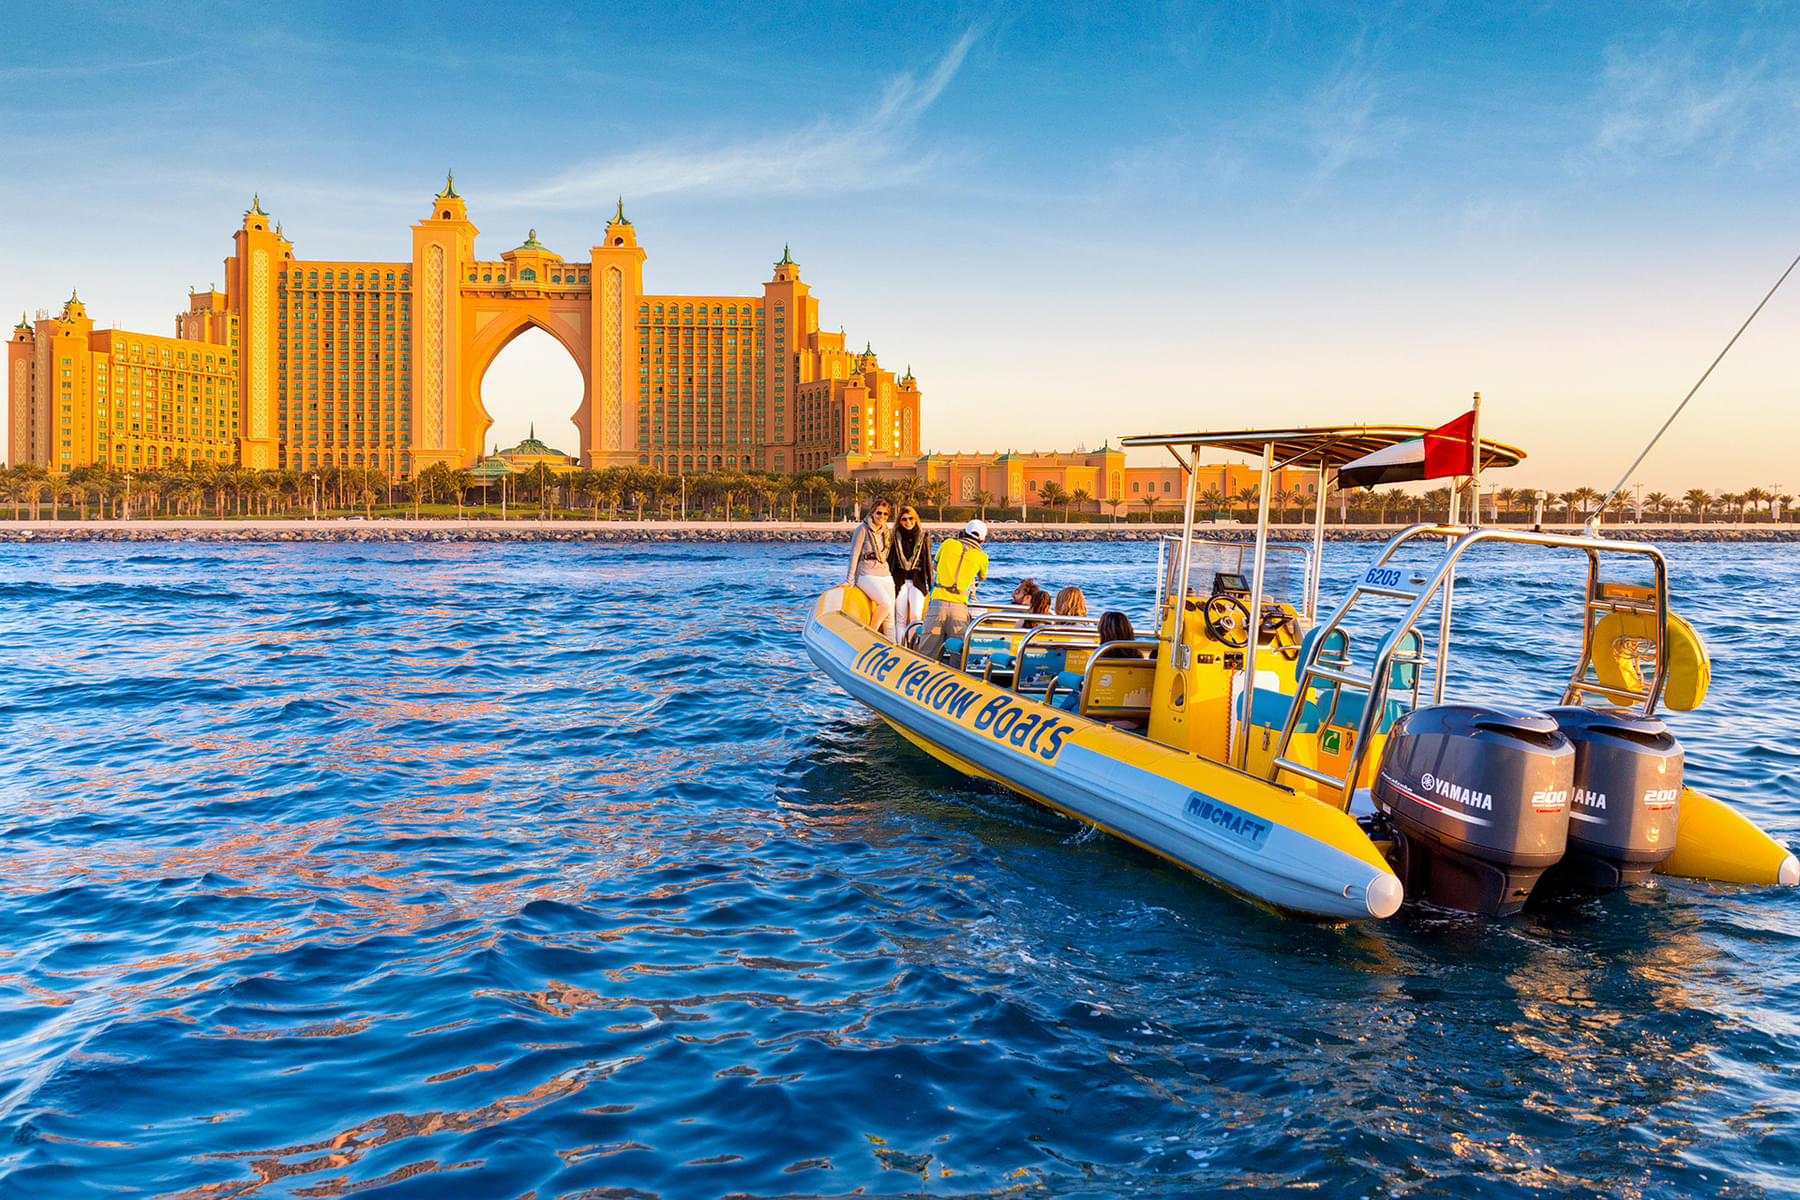 Appreciate the stunning Atlantis hotel as you explore Palm Jumeirah